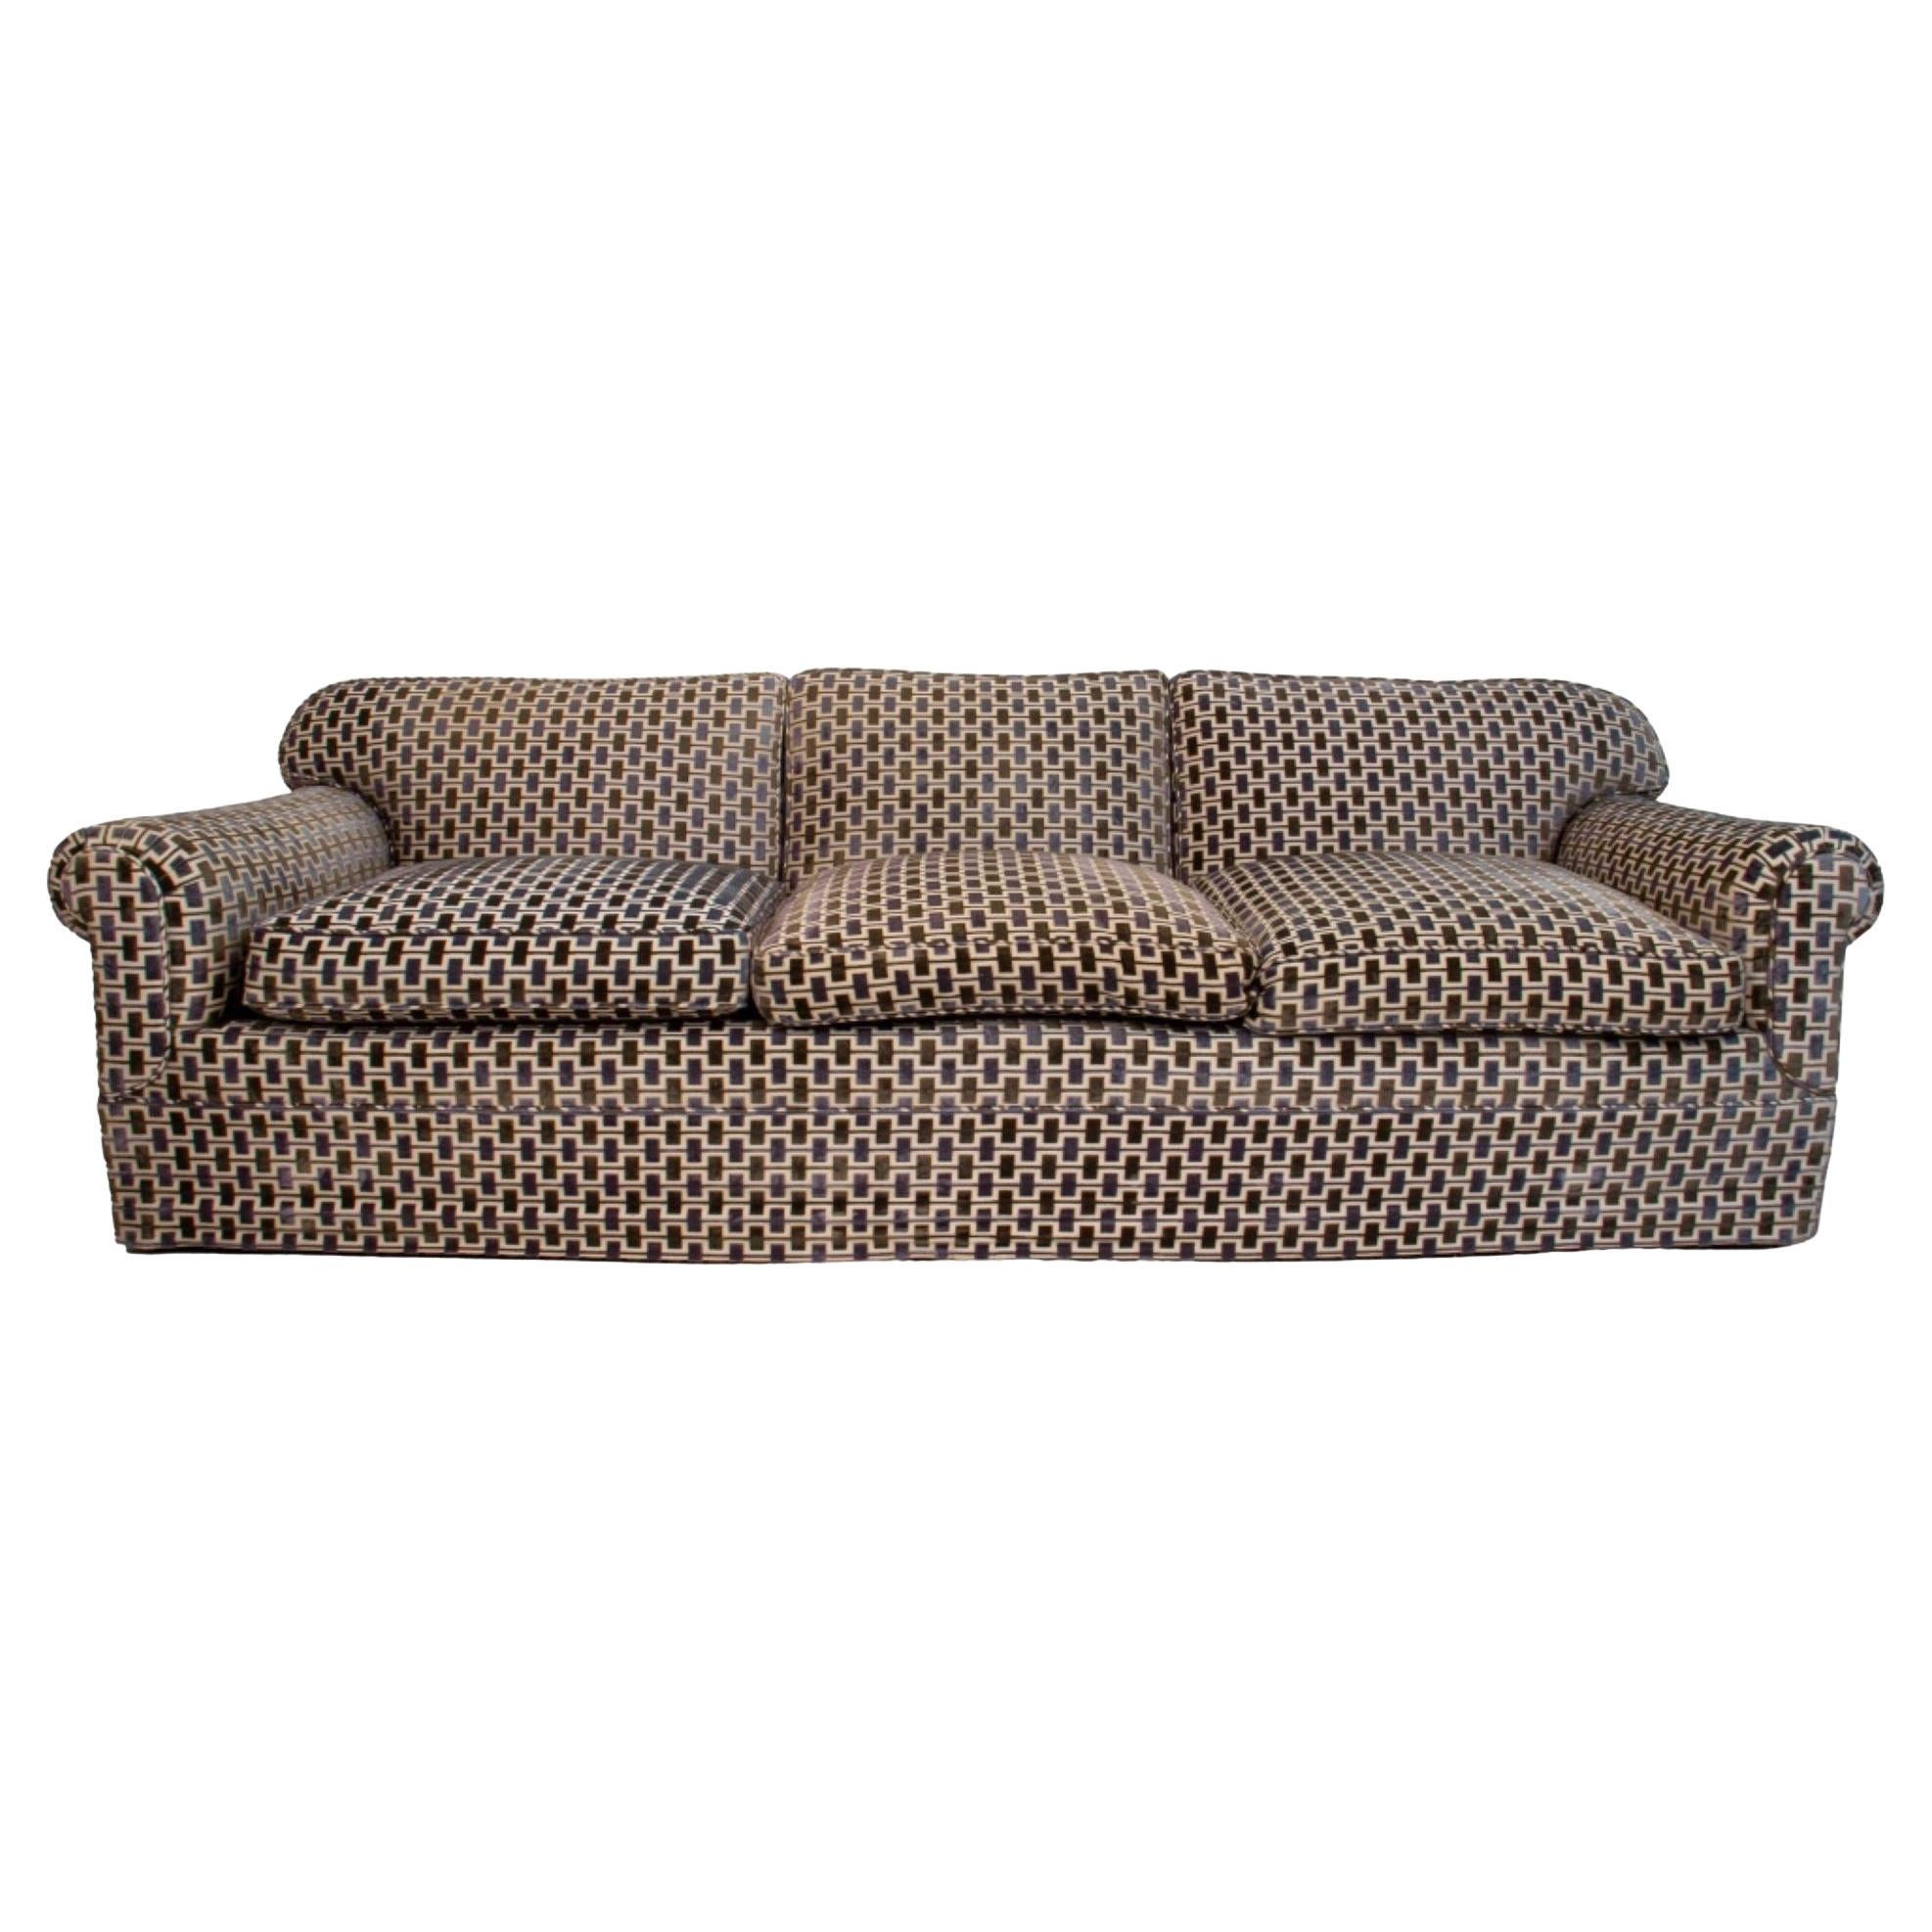 David Hicks Manner Upholstered Sofa